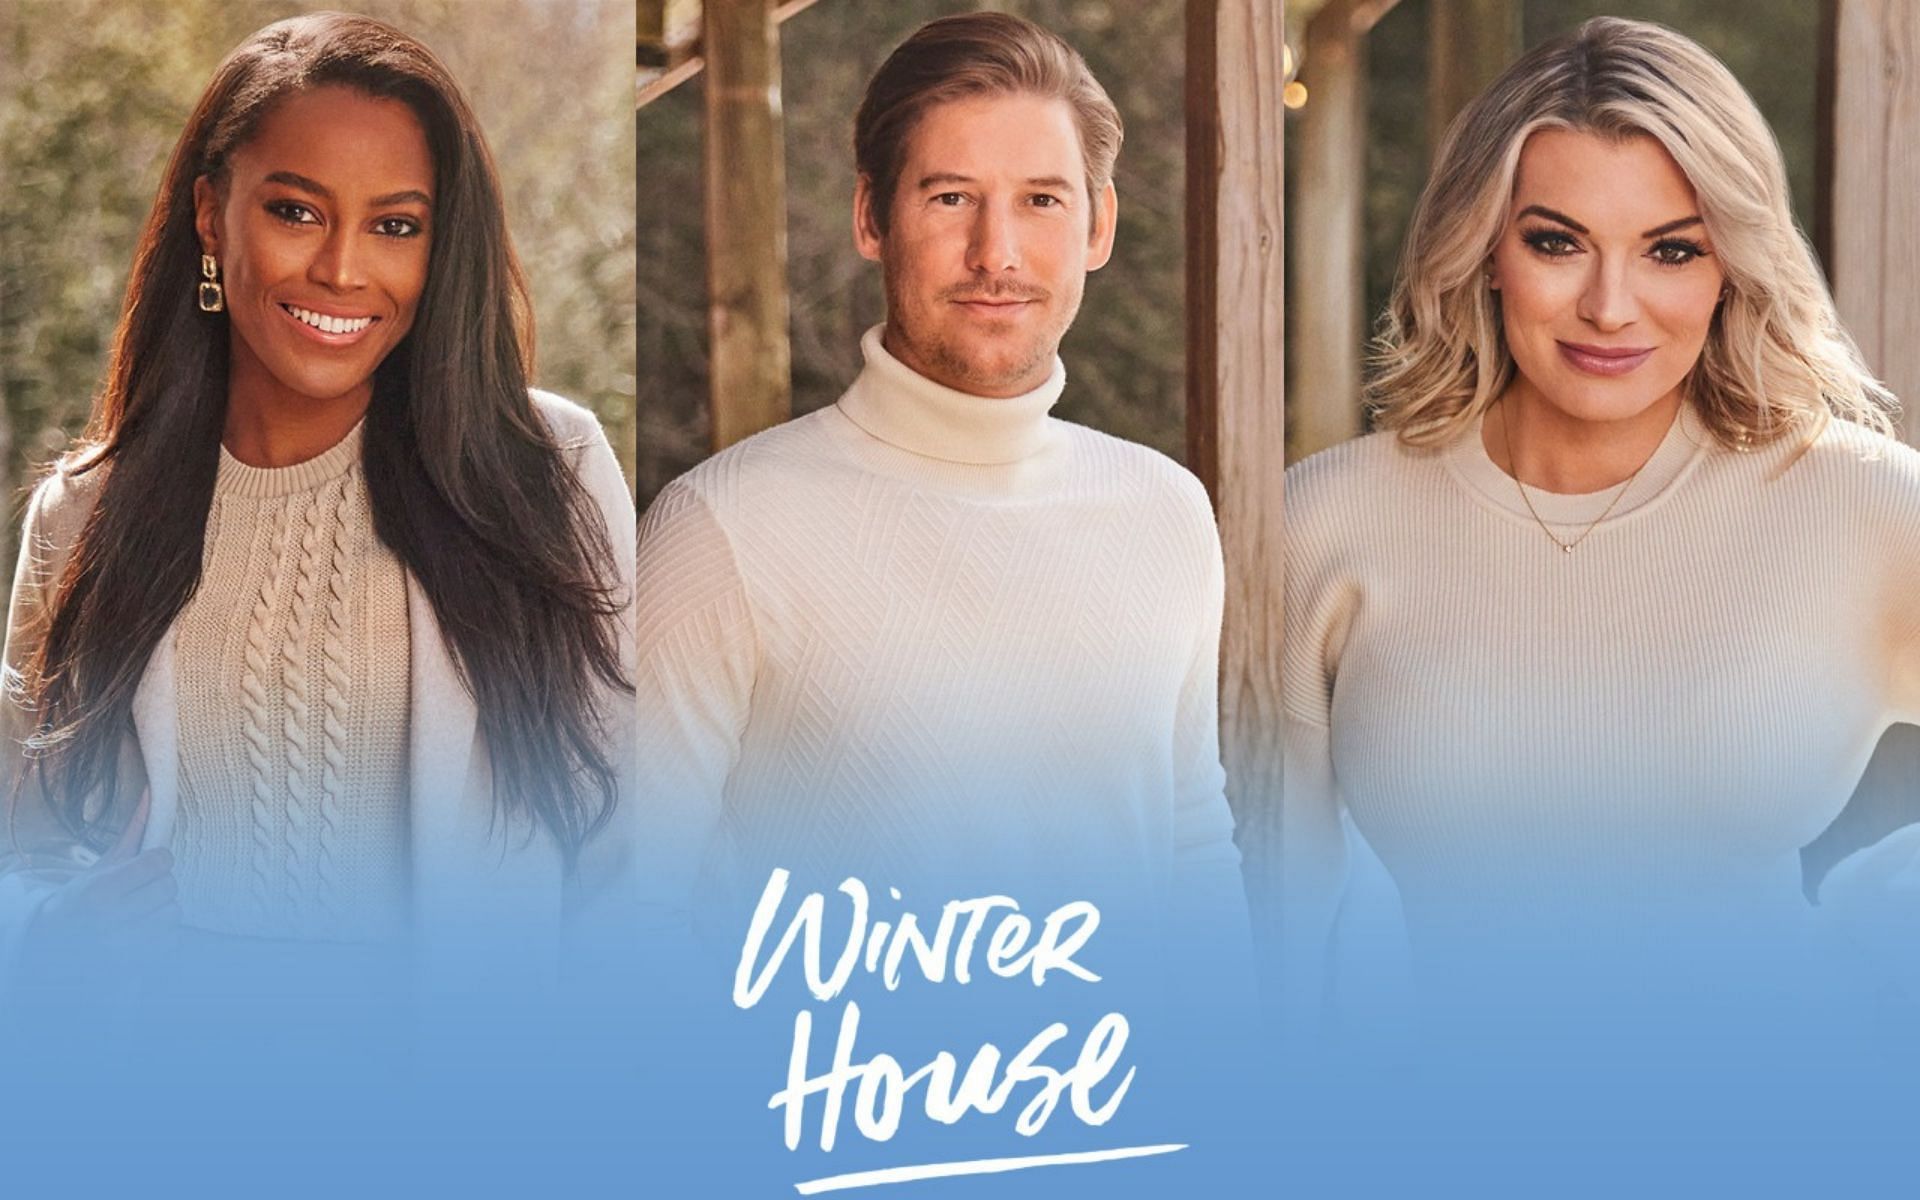 &#039;Winter House&#039; cast: Ciara Miller, Austen Kroll, Lindsay Hubbard (Image via Sportskeeda)